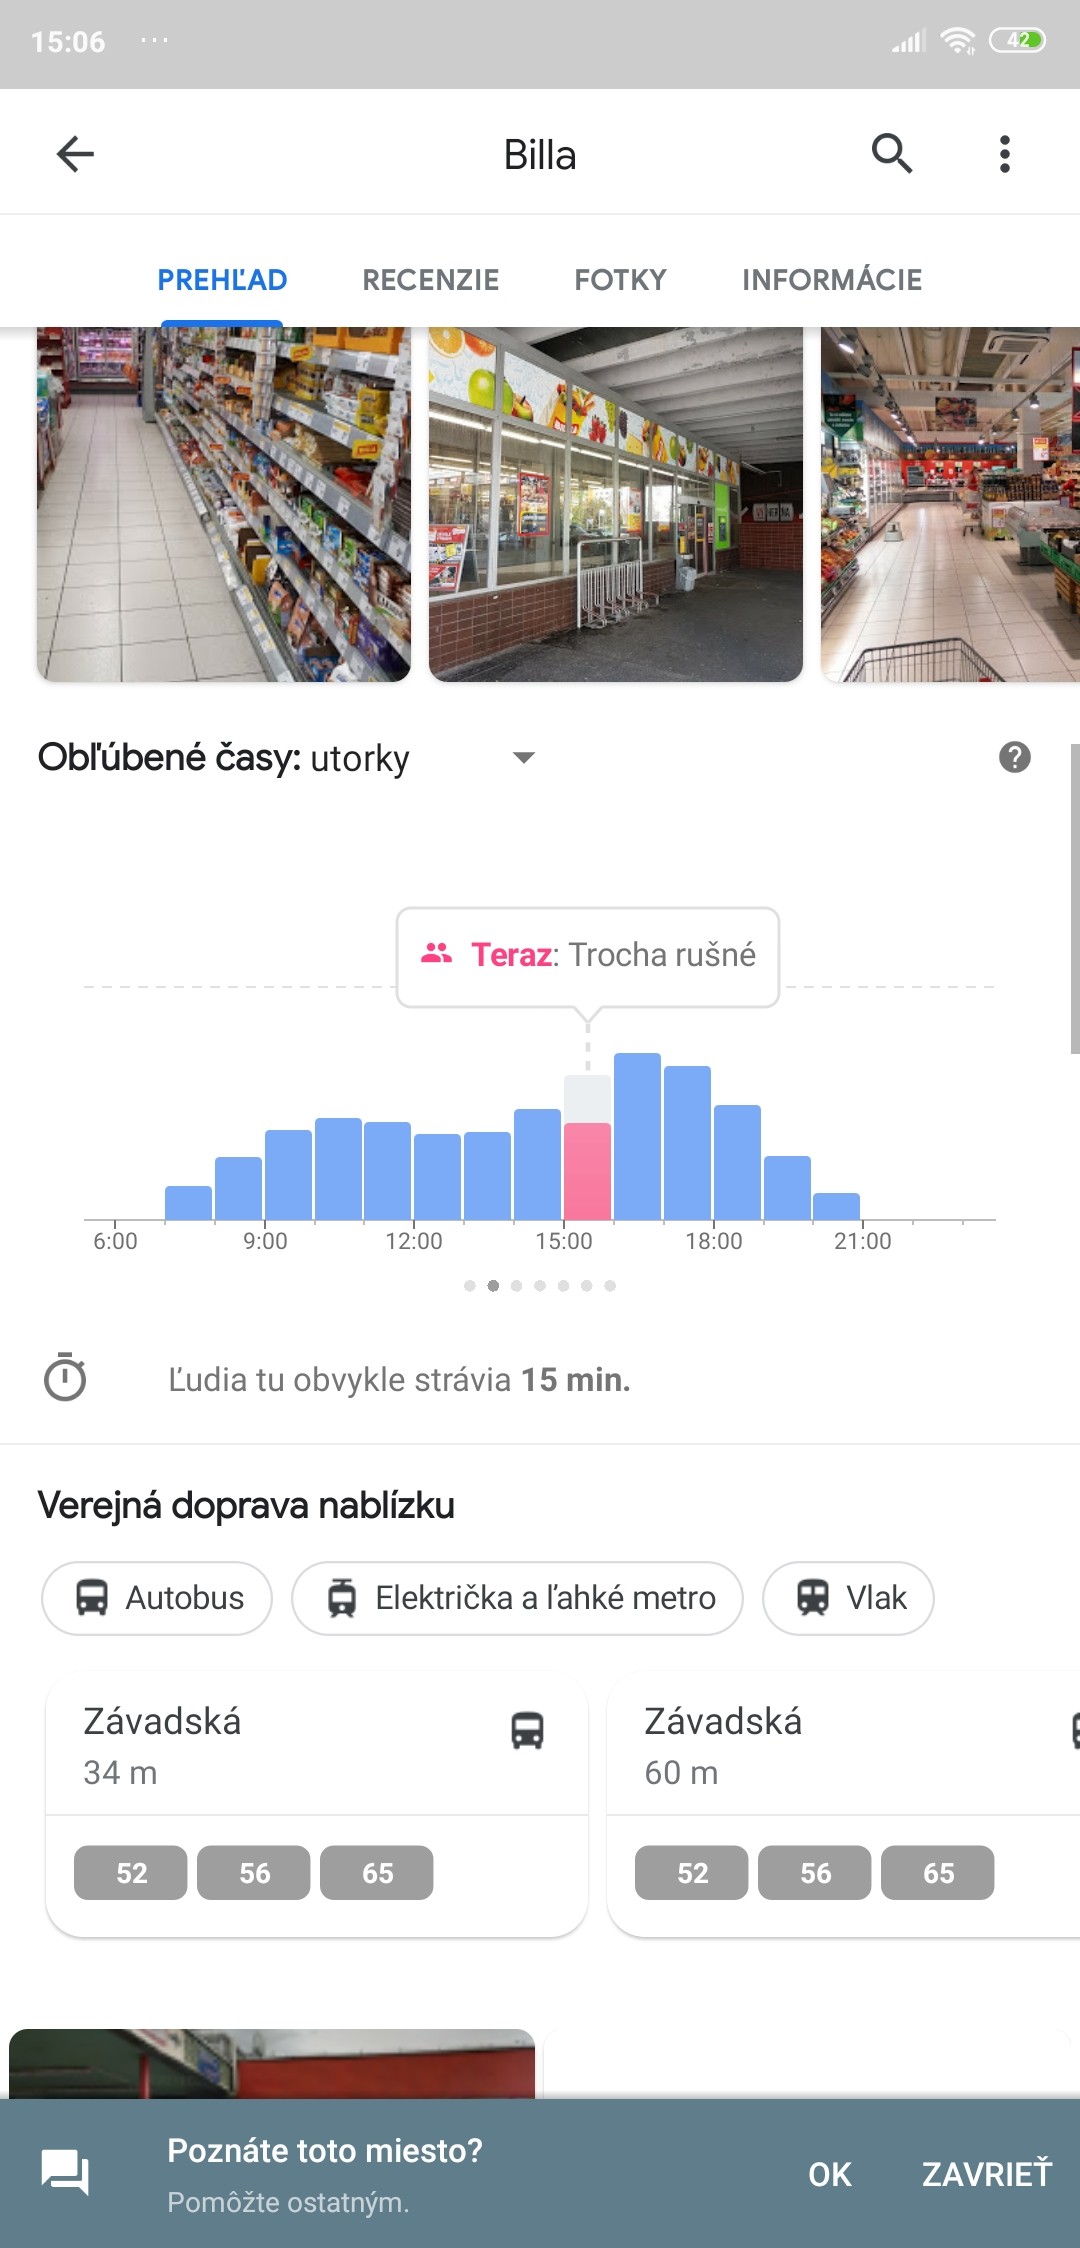 Google Mapy_ako zistit kolko ludi je v obchode_3